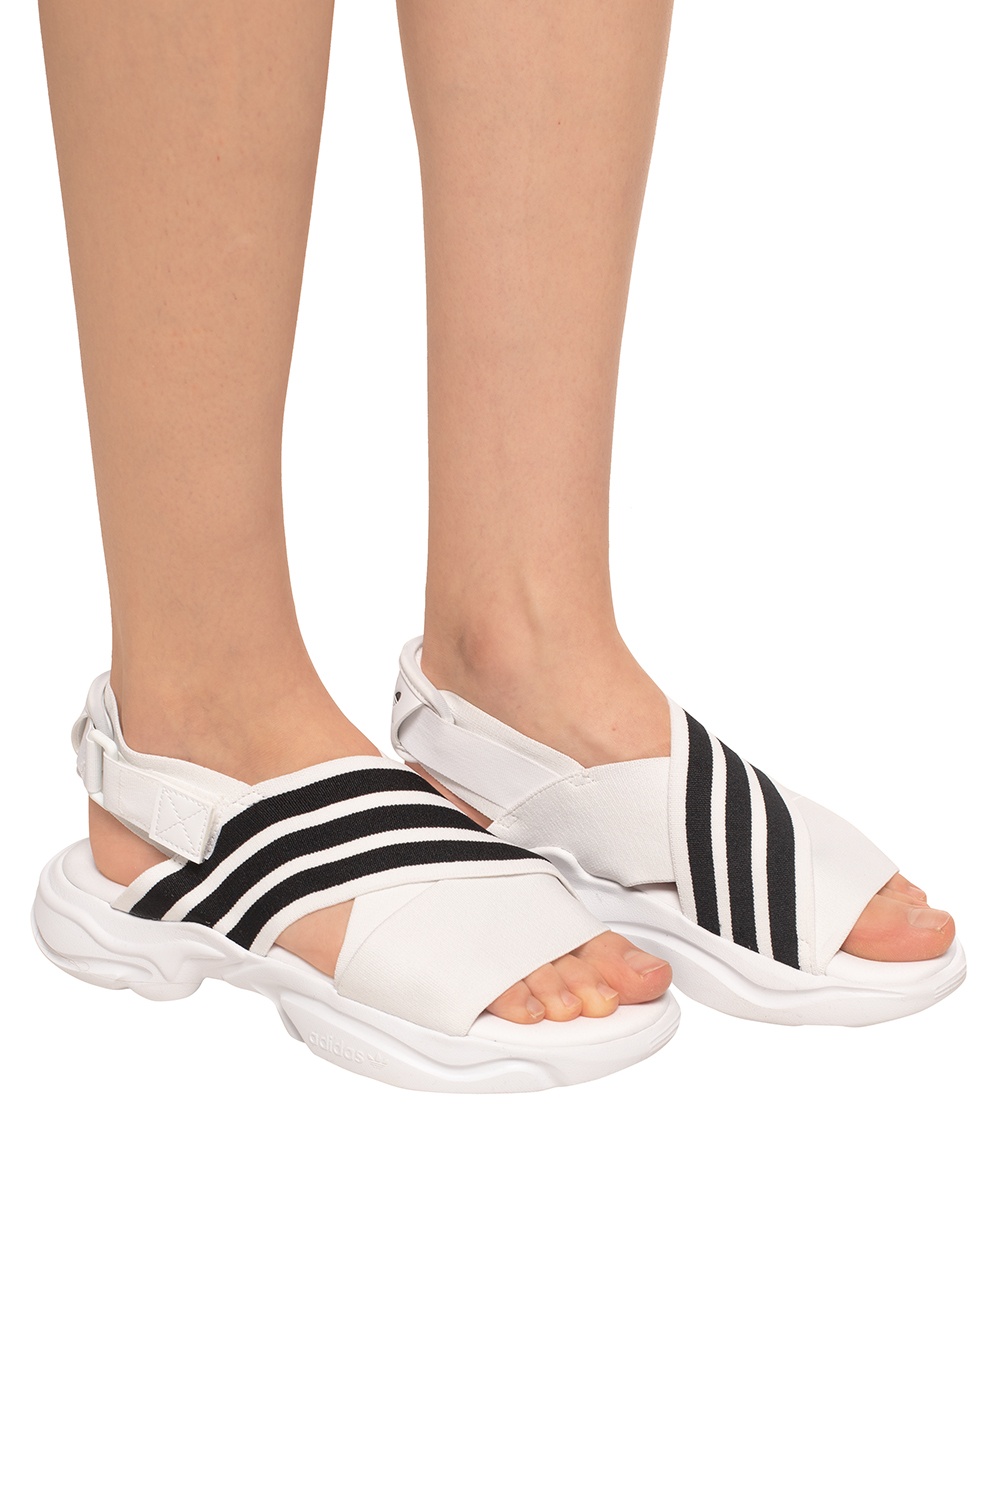 magmur sandals adidas